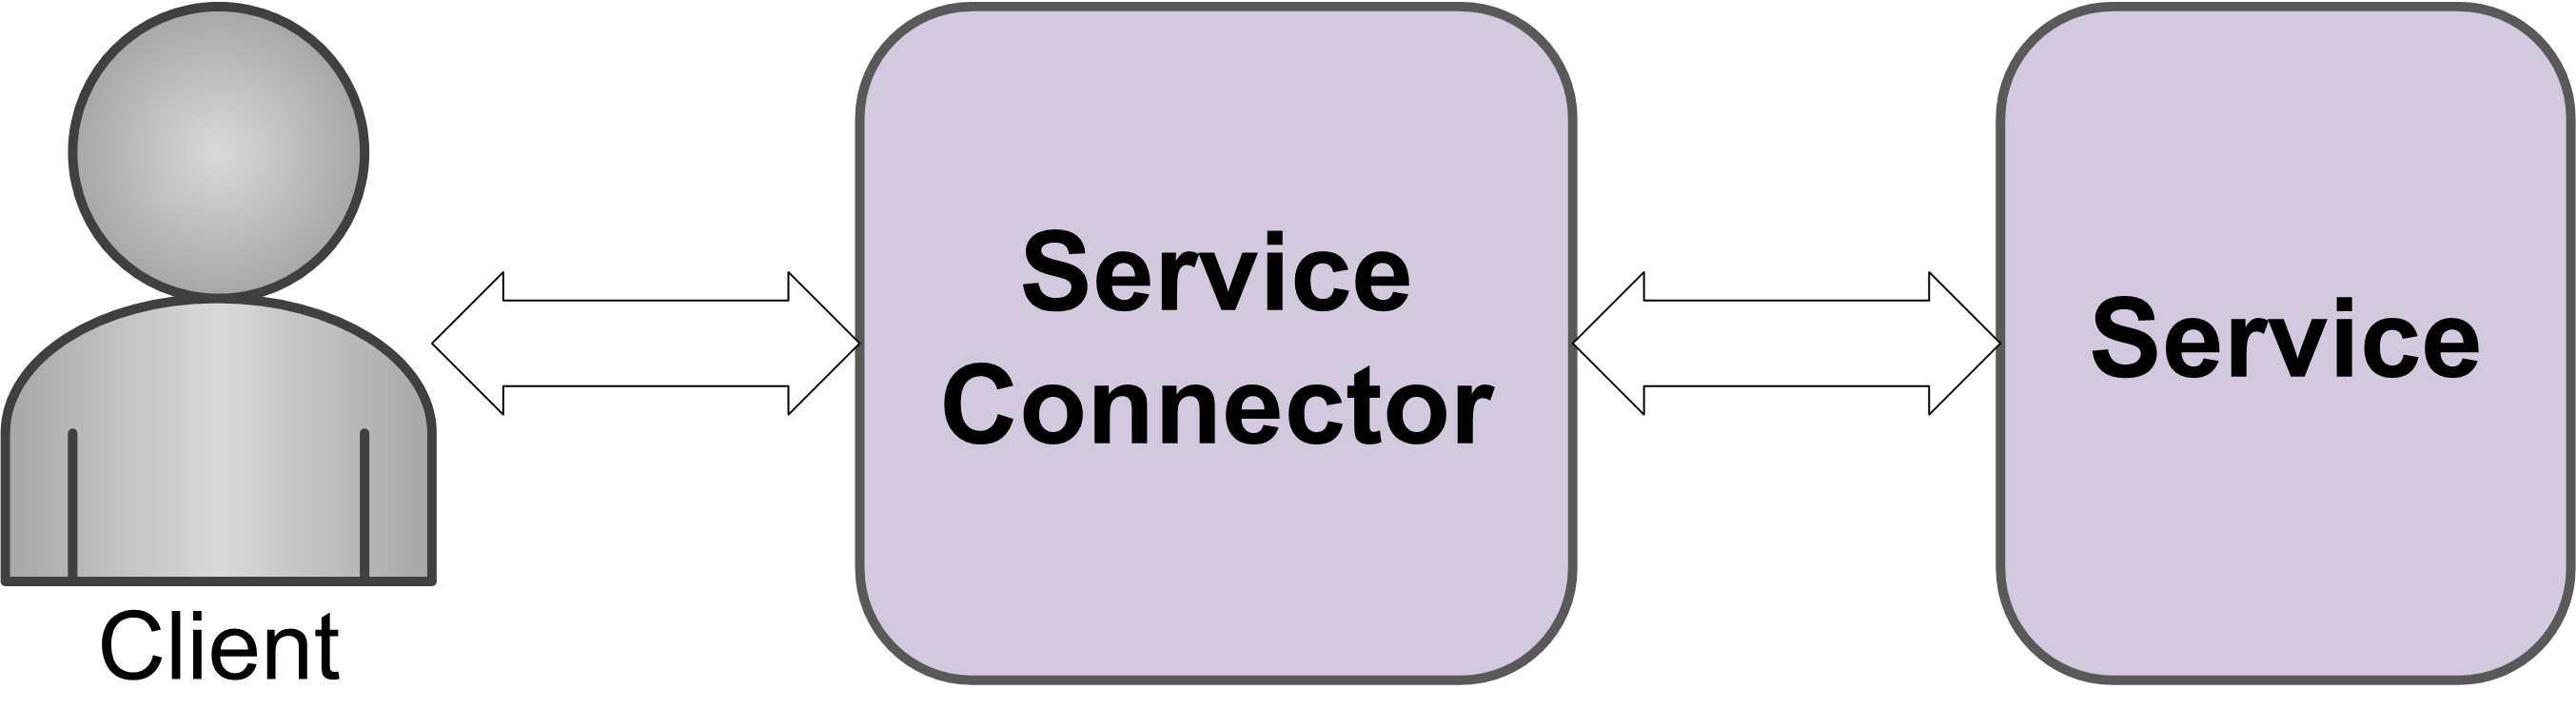 Service Connector